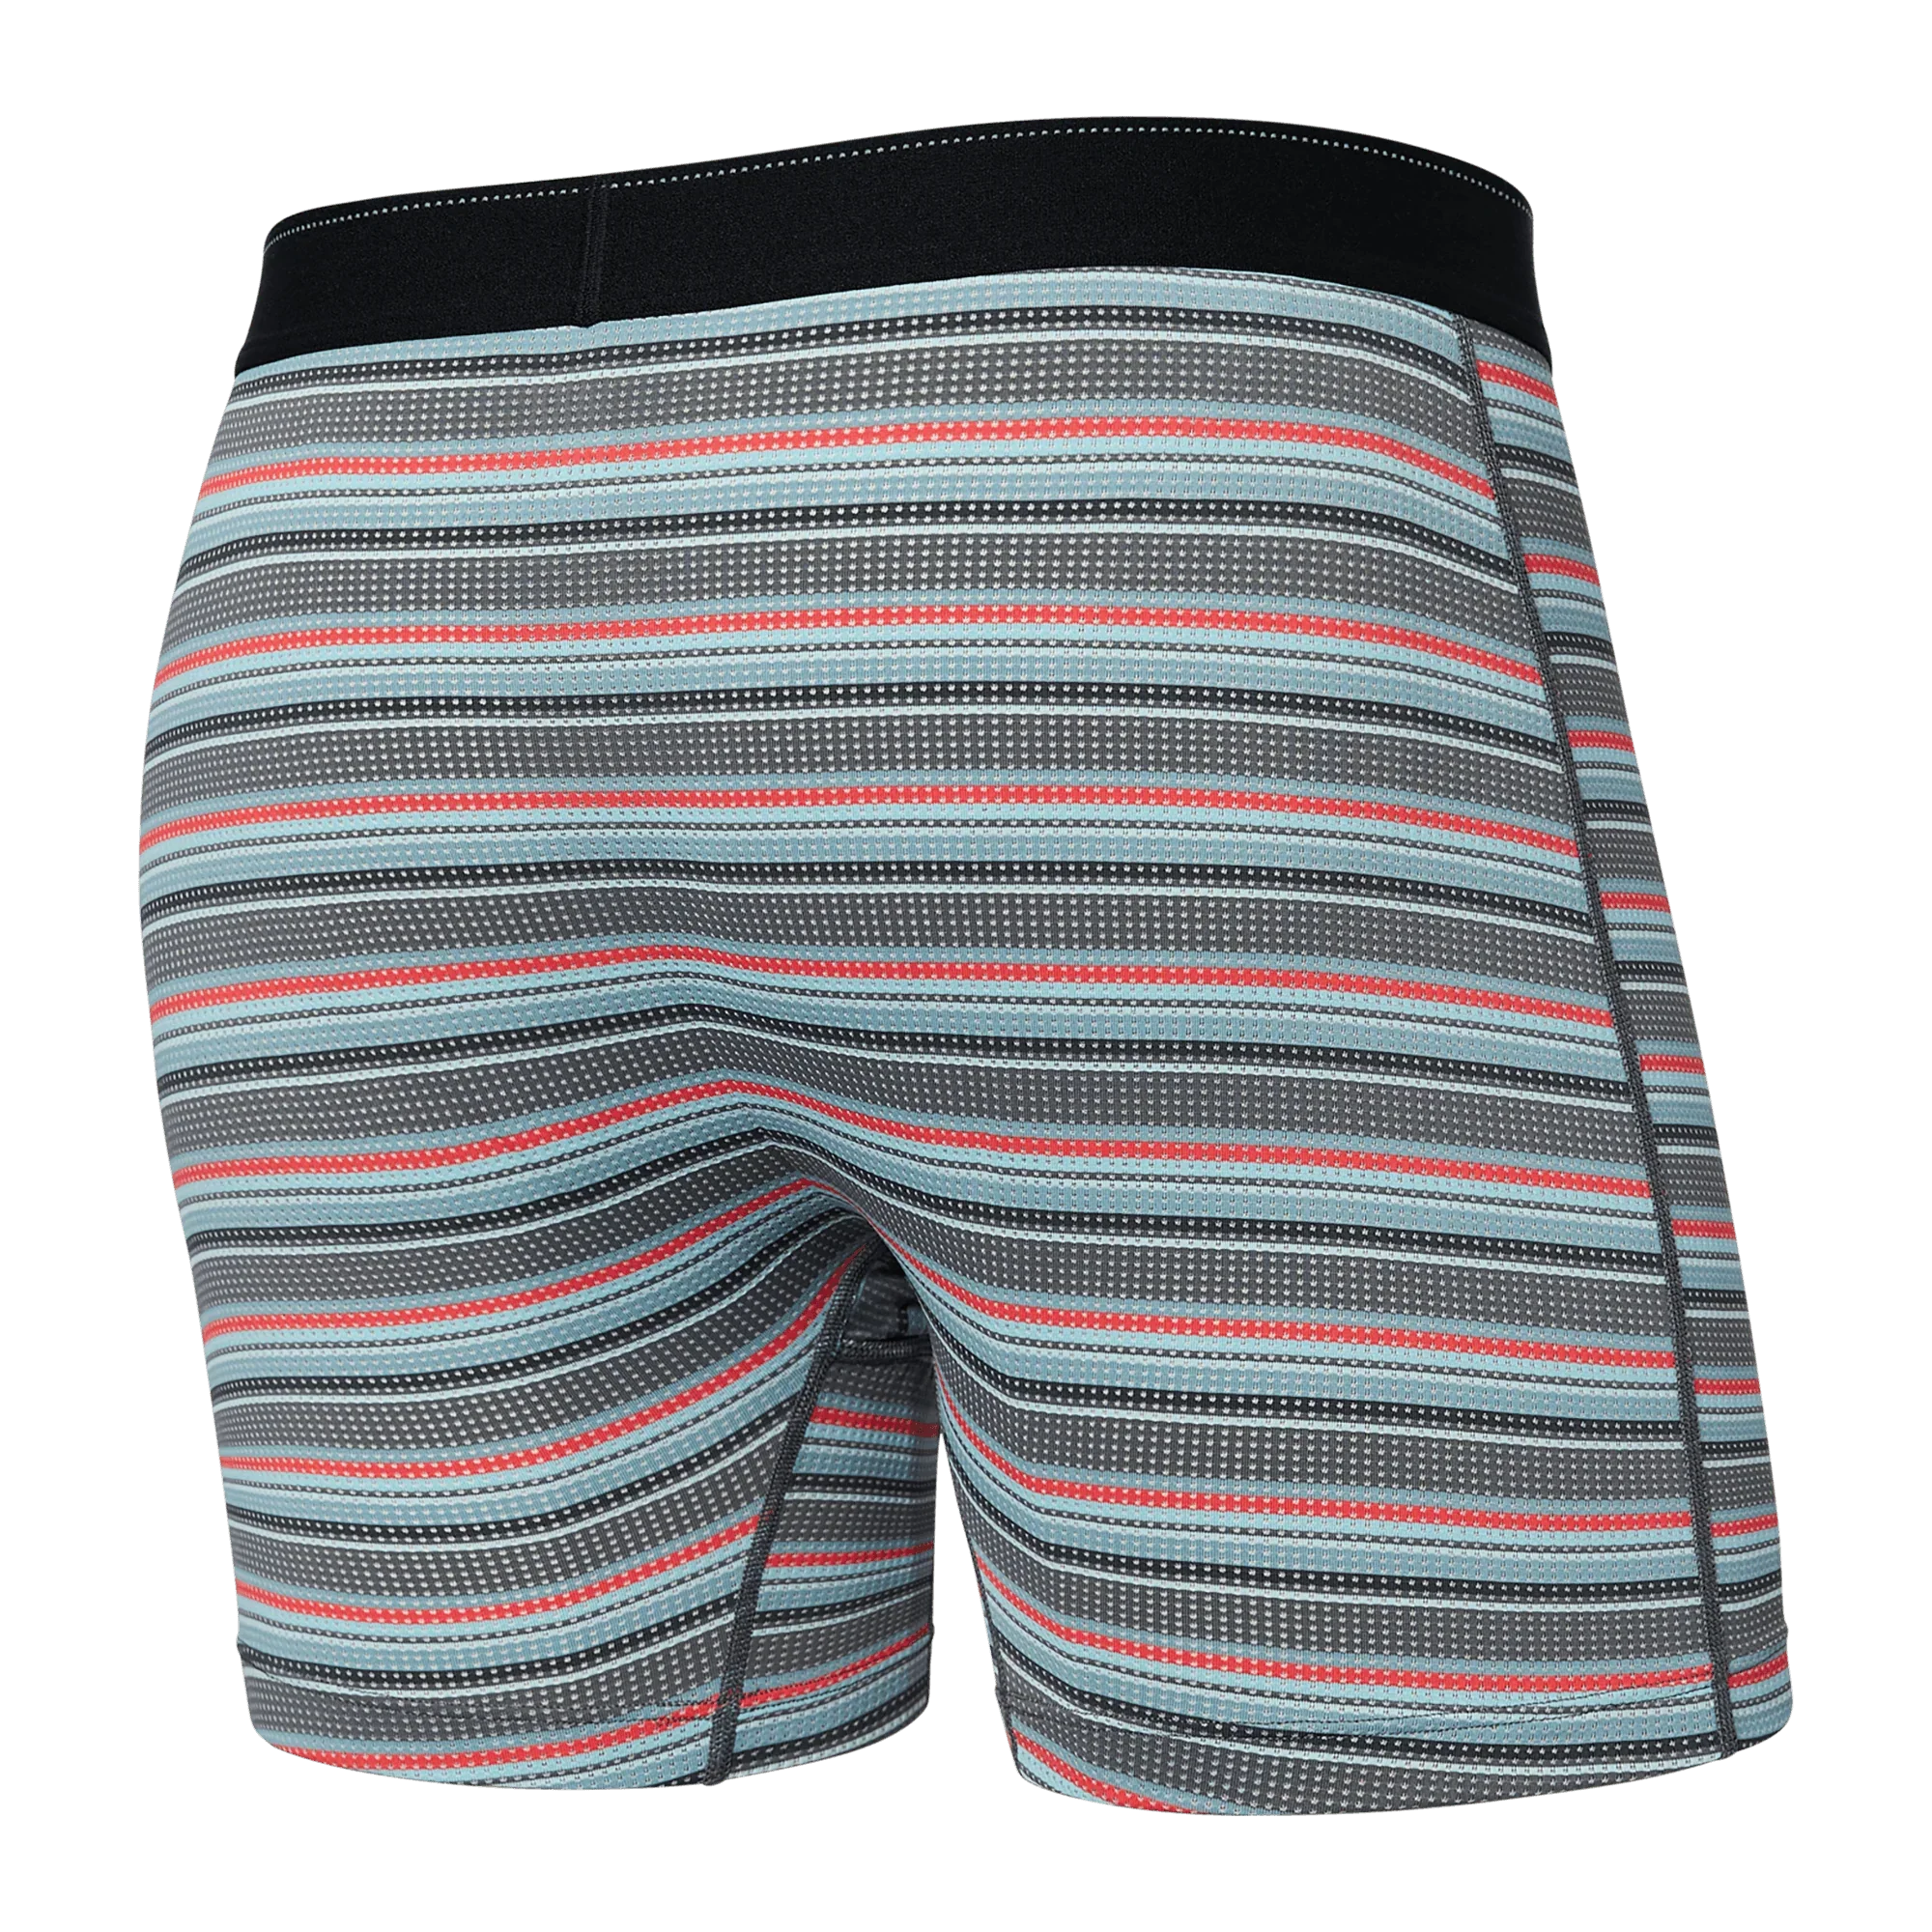 'SAXX Quest Quick Dry Mesh Boxer Brief - Field Stripe' in 'Charcoal' colour